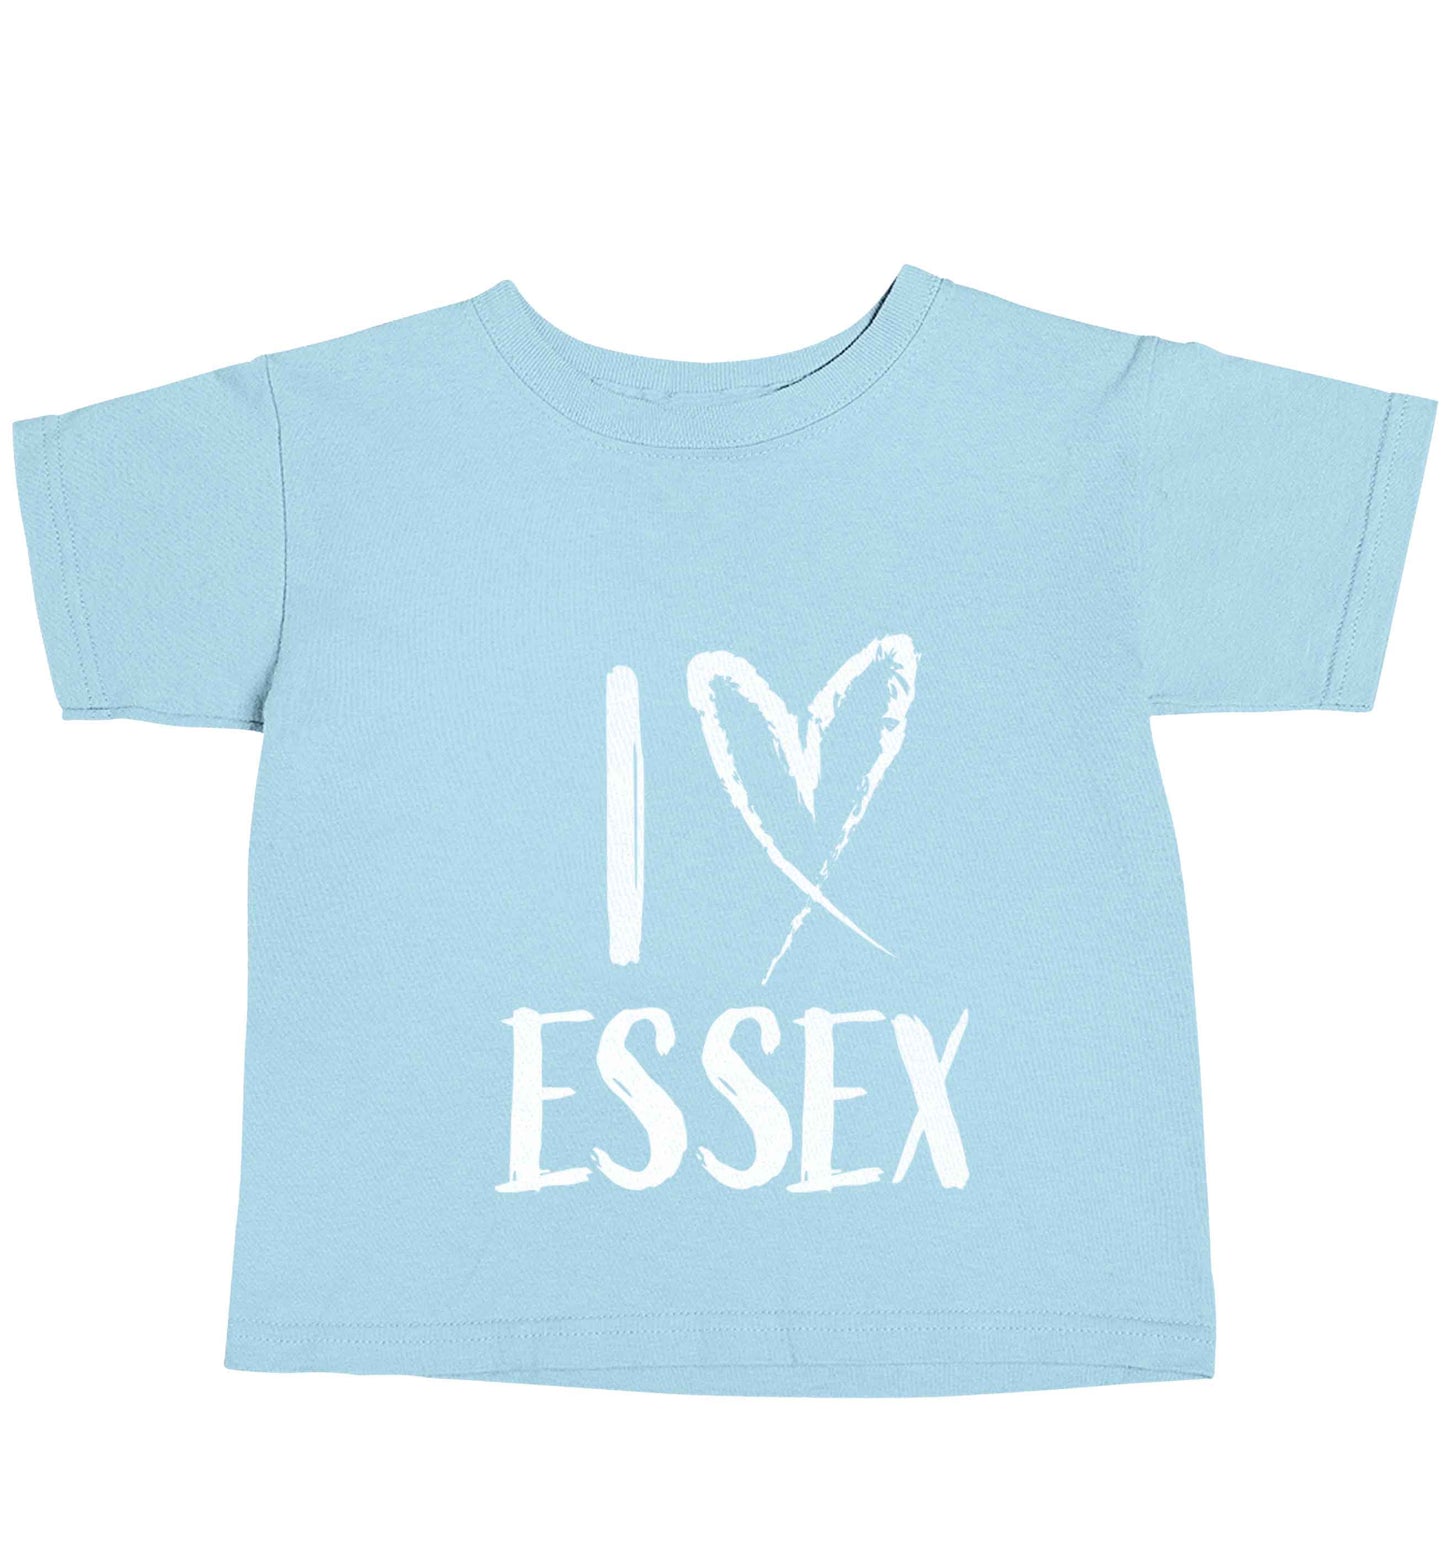 I love Essex light blue baby toddler Tshirt 2 Years